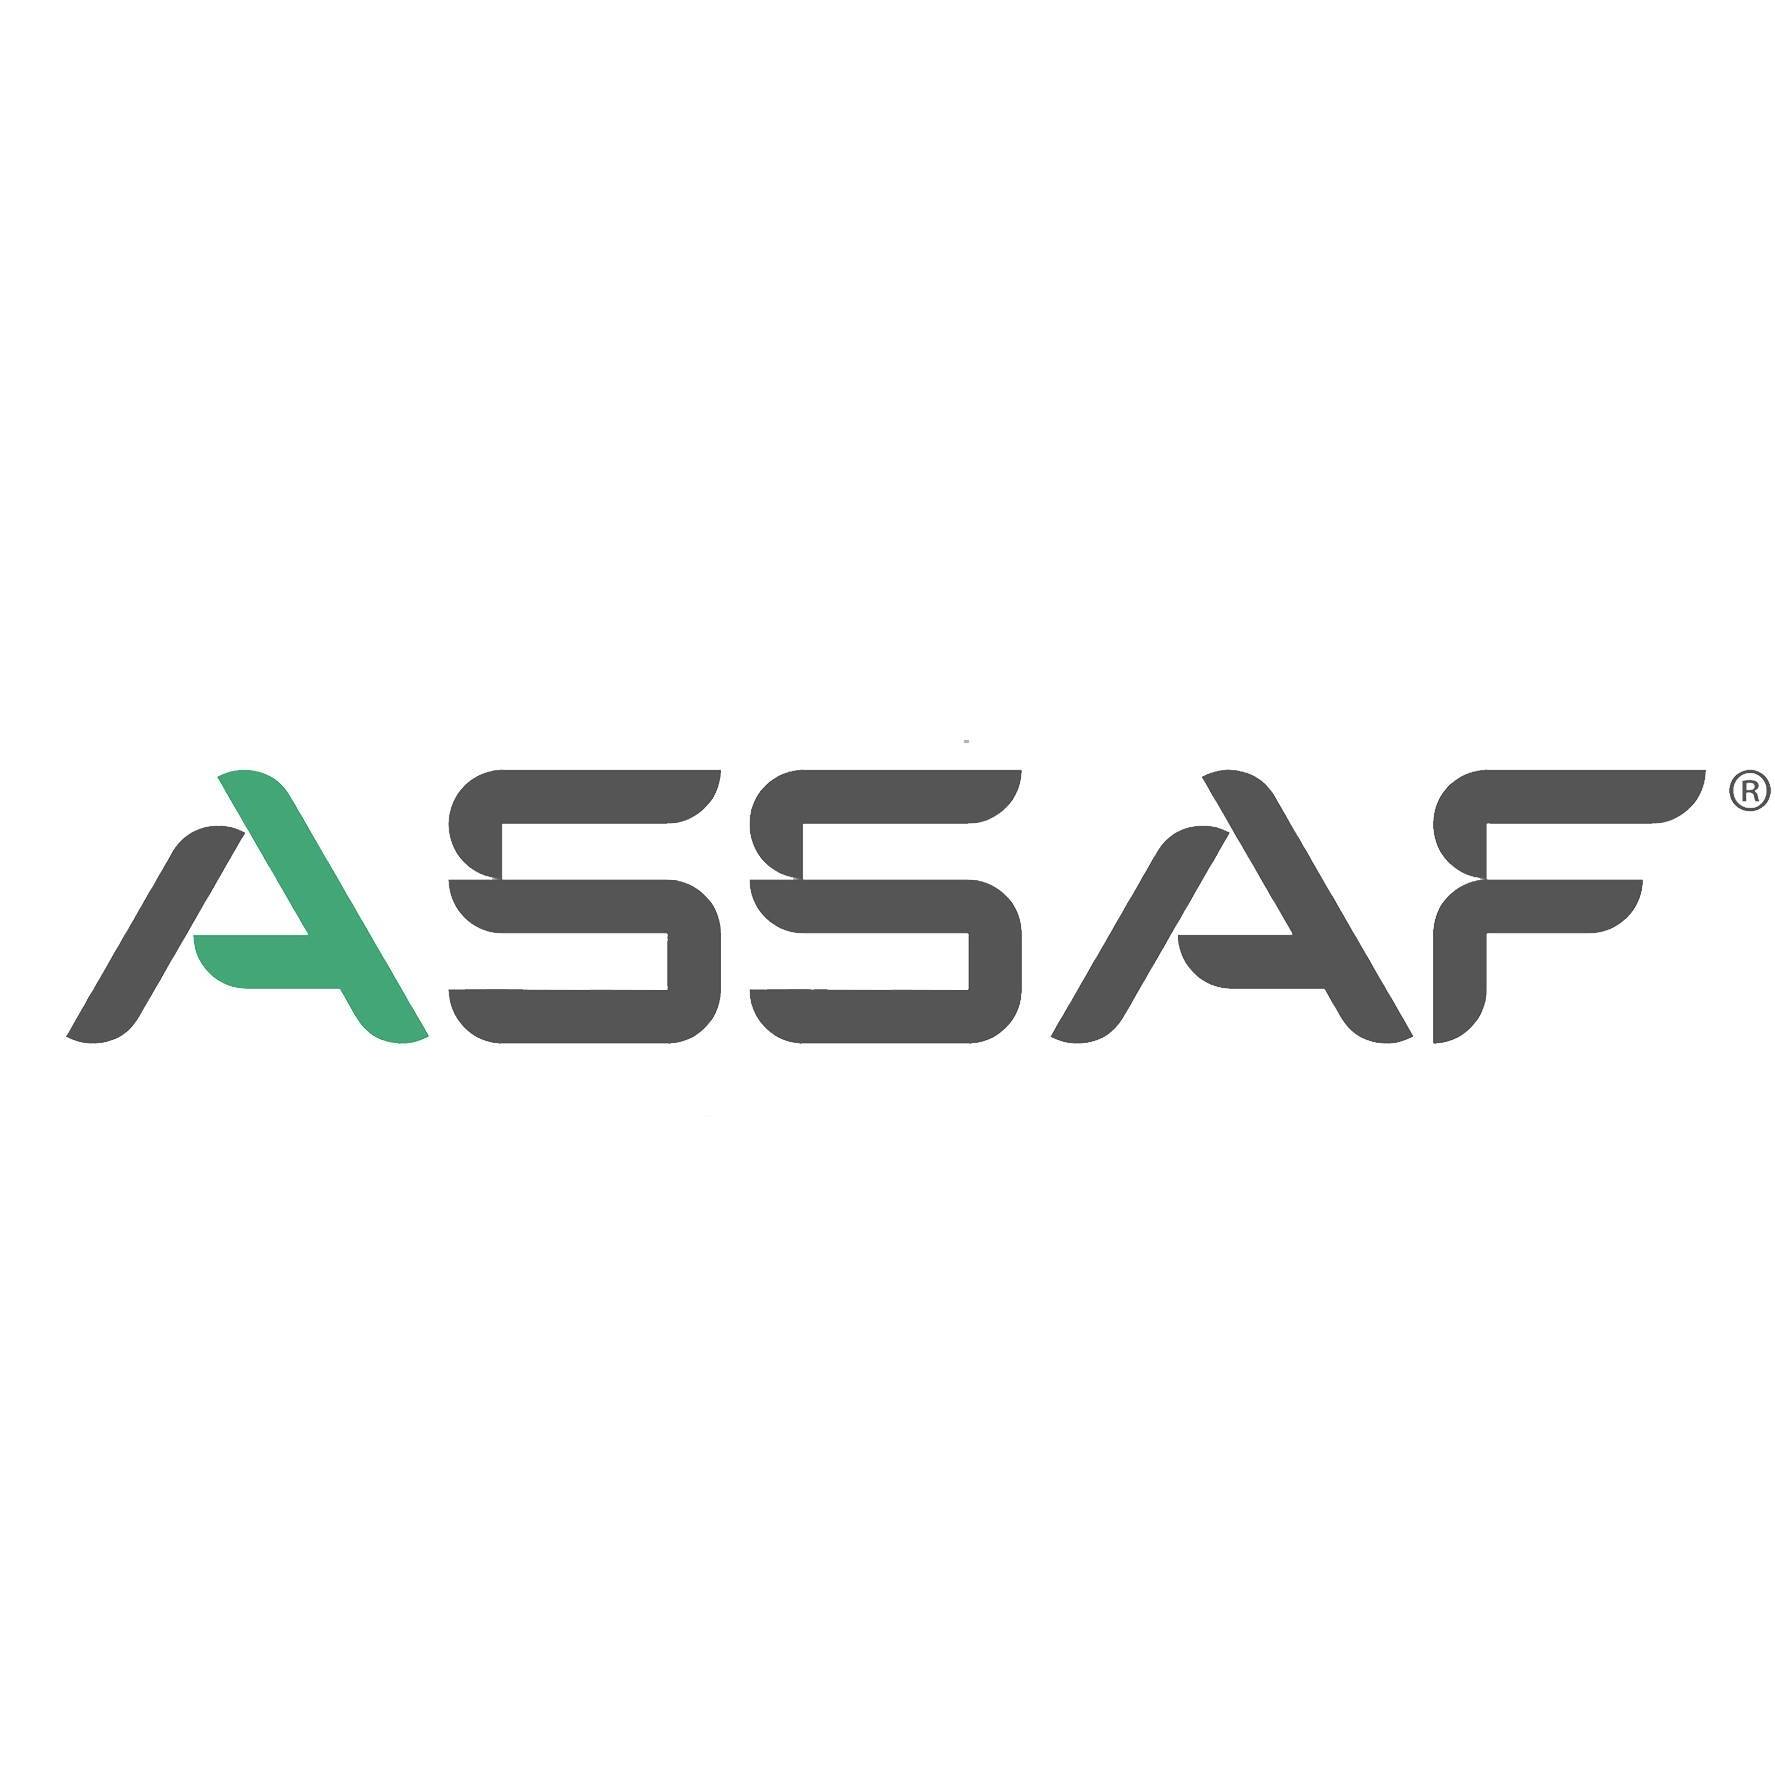 Assaf group